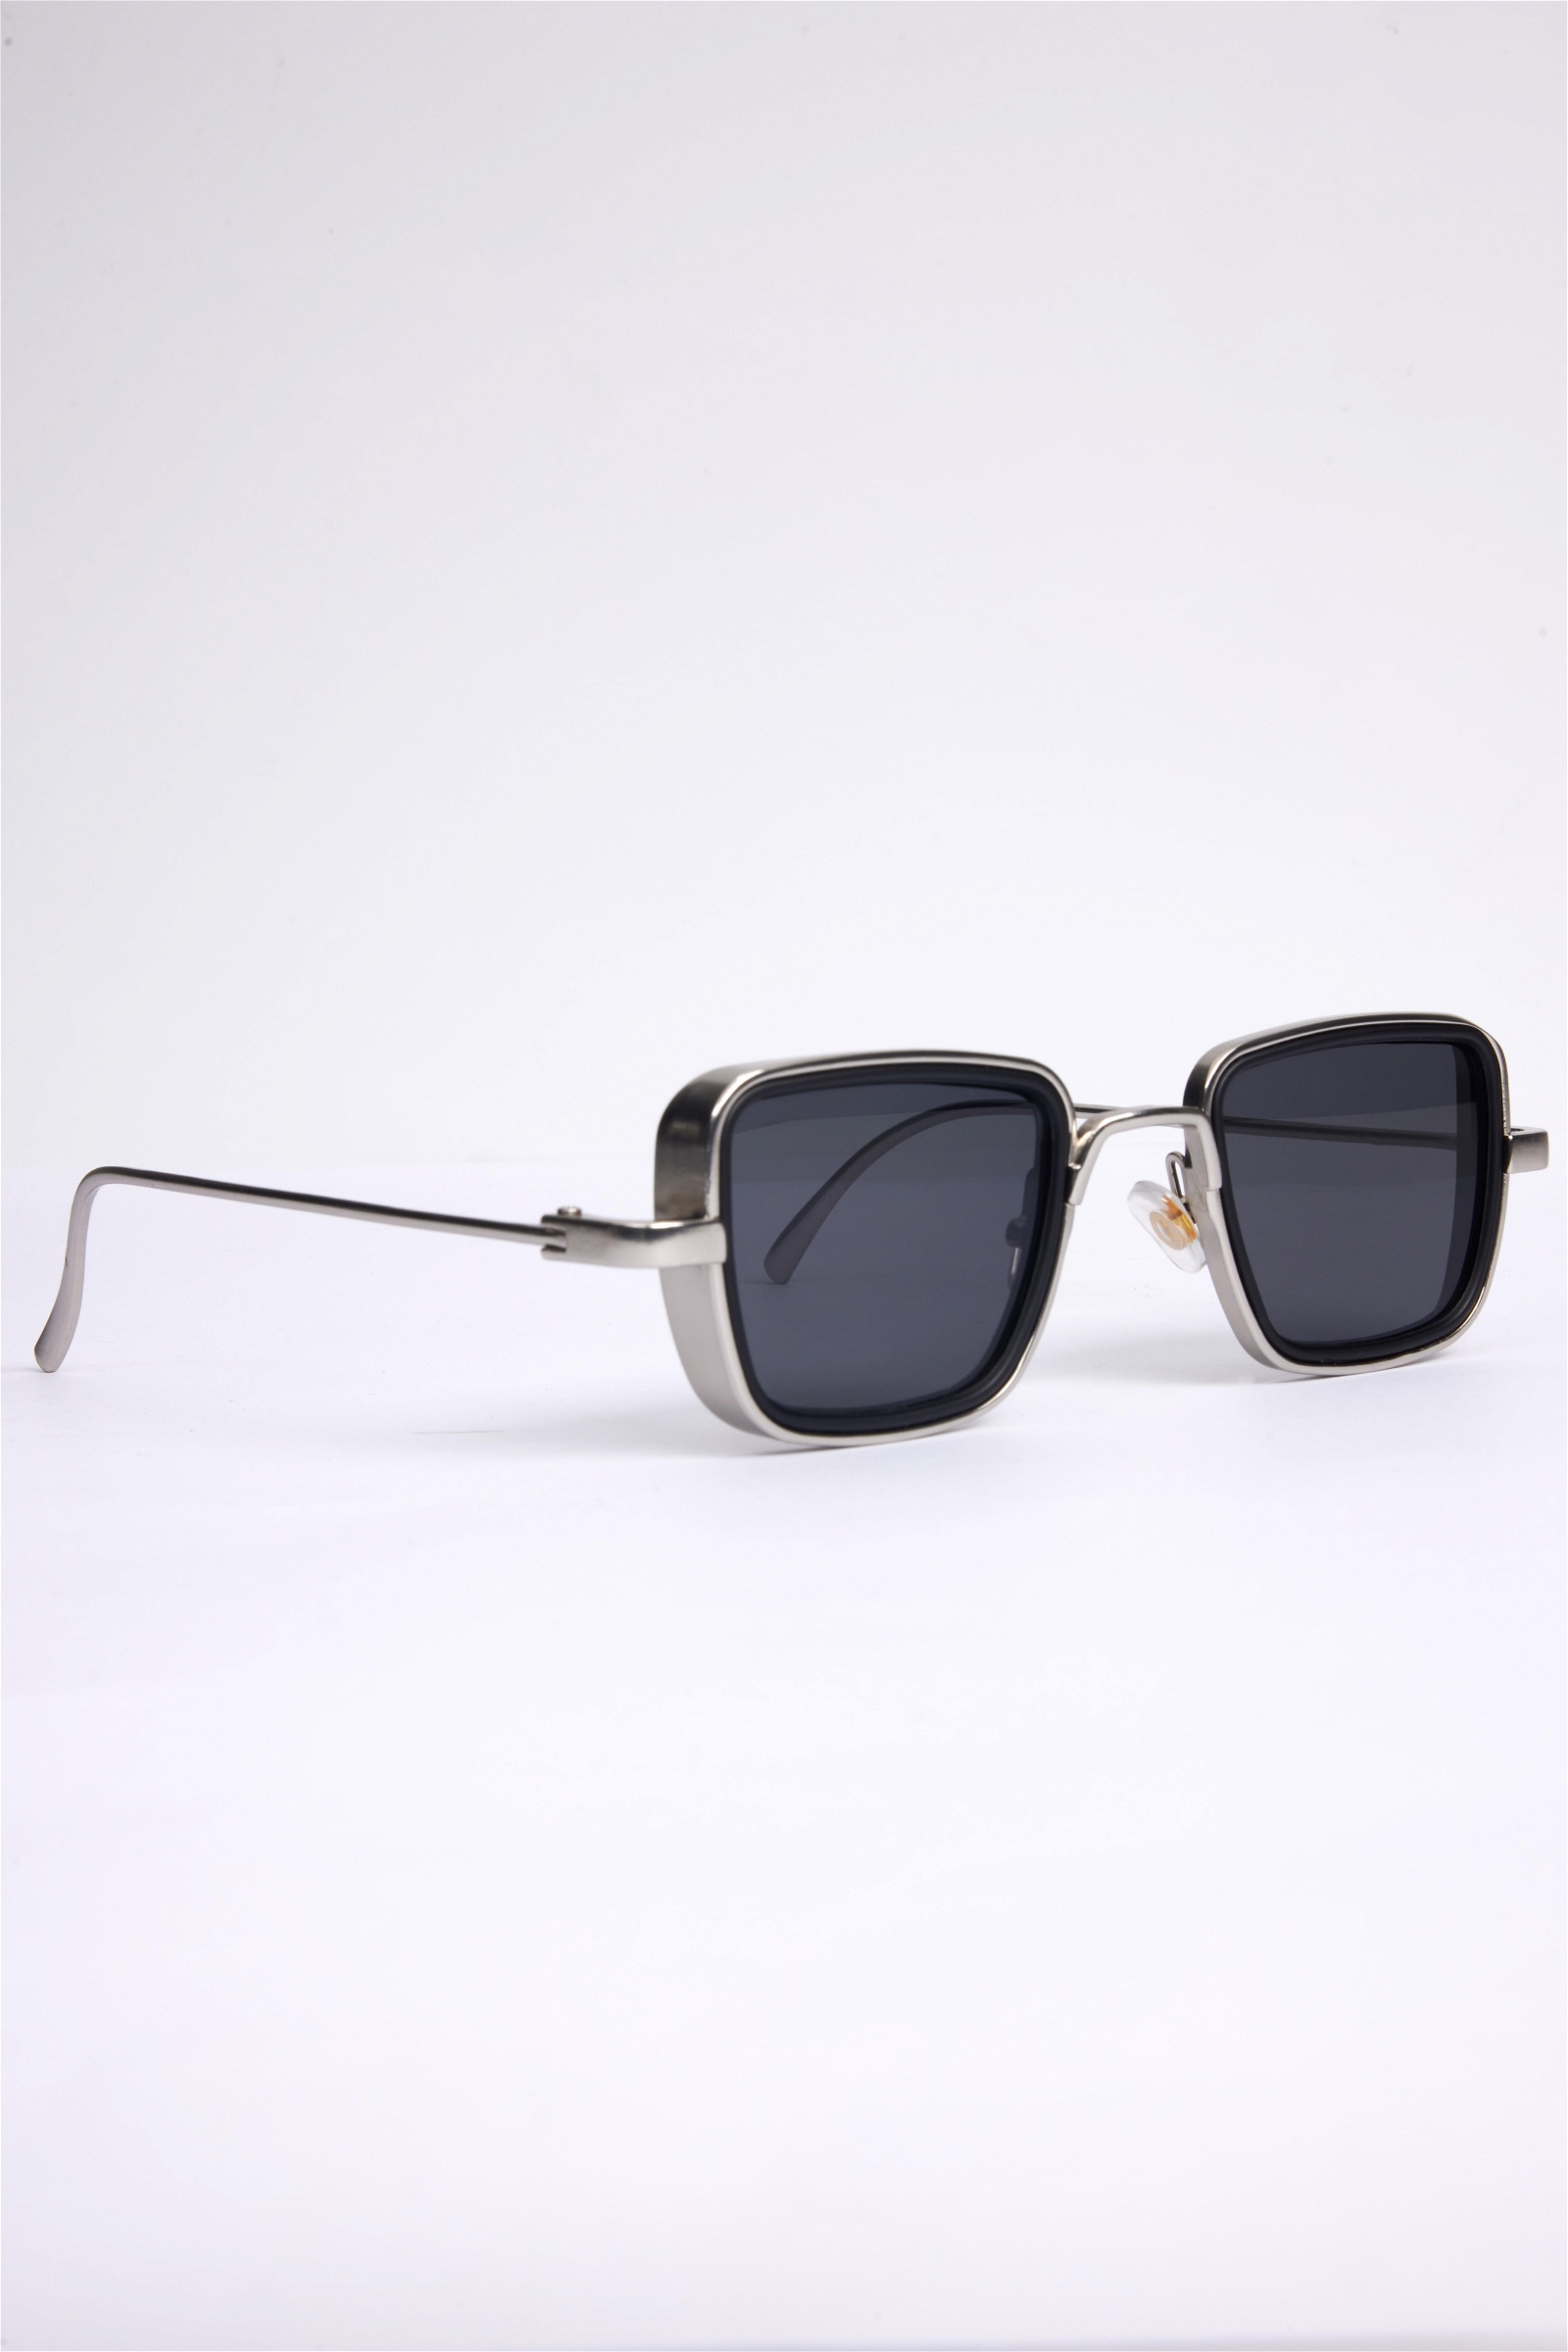 Plain Silver Sunglasses